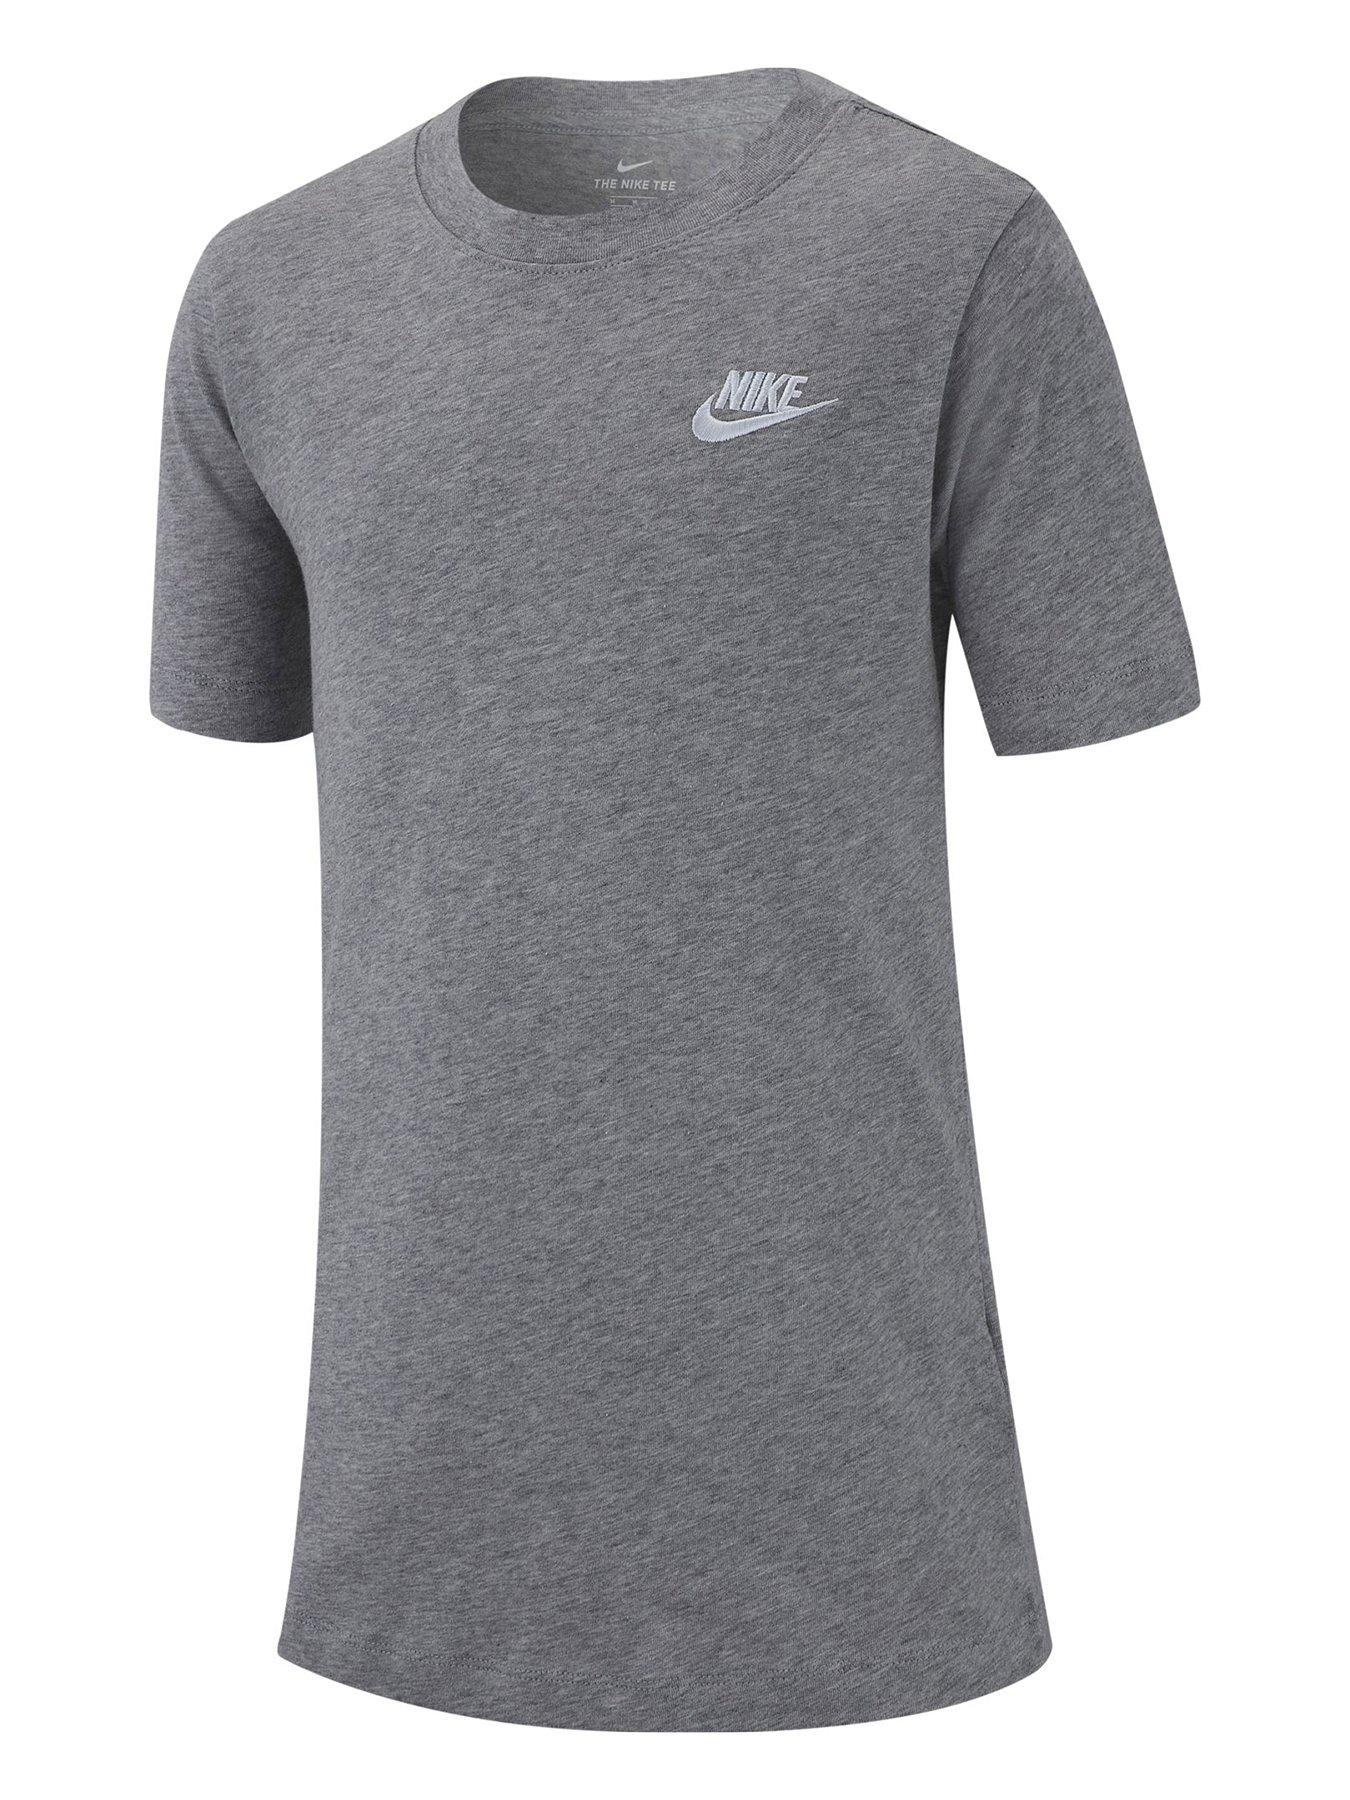 Nike Sportswear Kids Futura T-Shirt - Dark Grey/White | very.co.uk